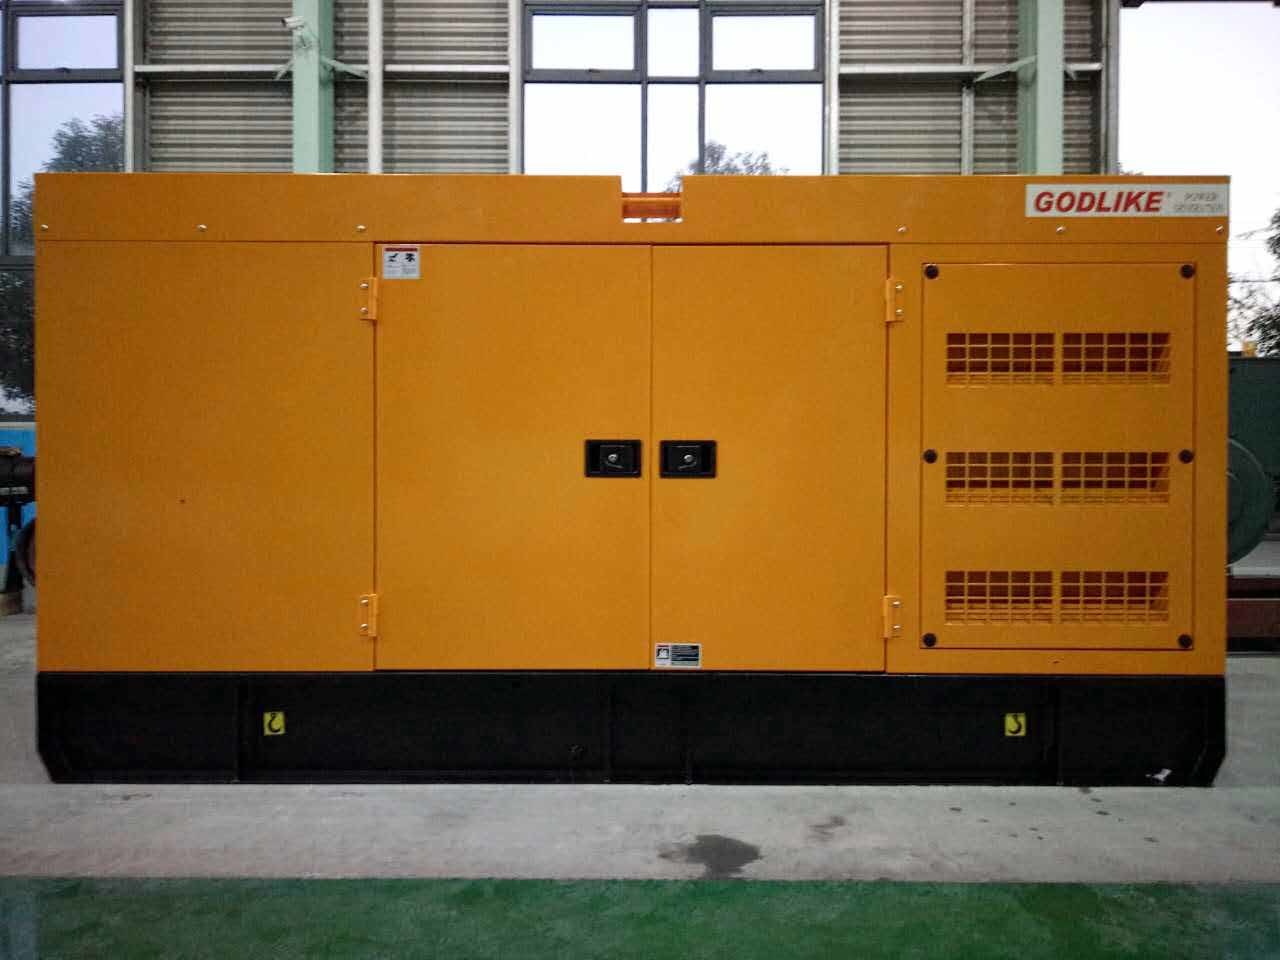 CE, ISO Factory 240kw/300kVA Cummins Diesel Generator 9nta855-G1b) (GDC300*S)